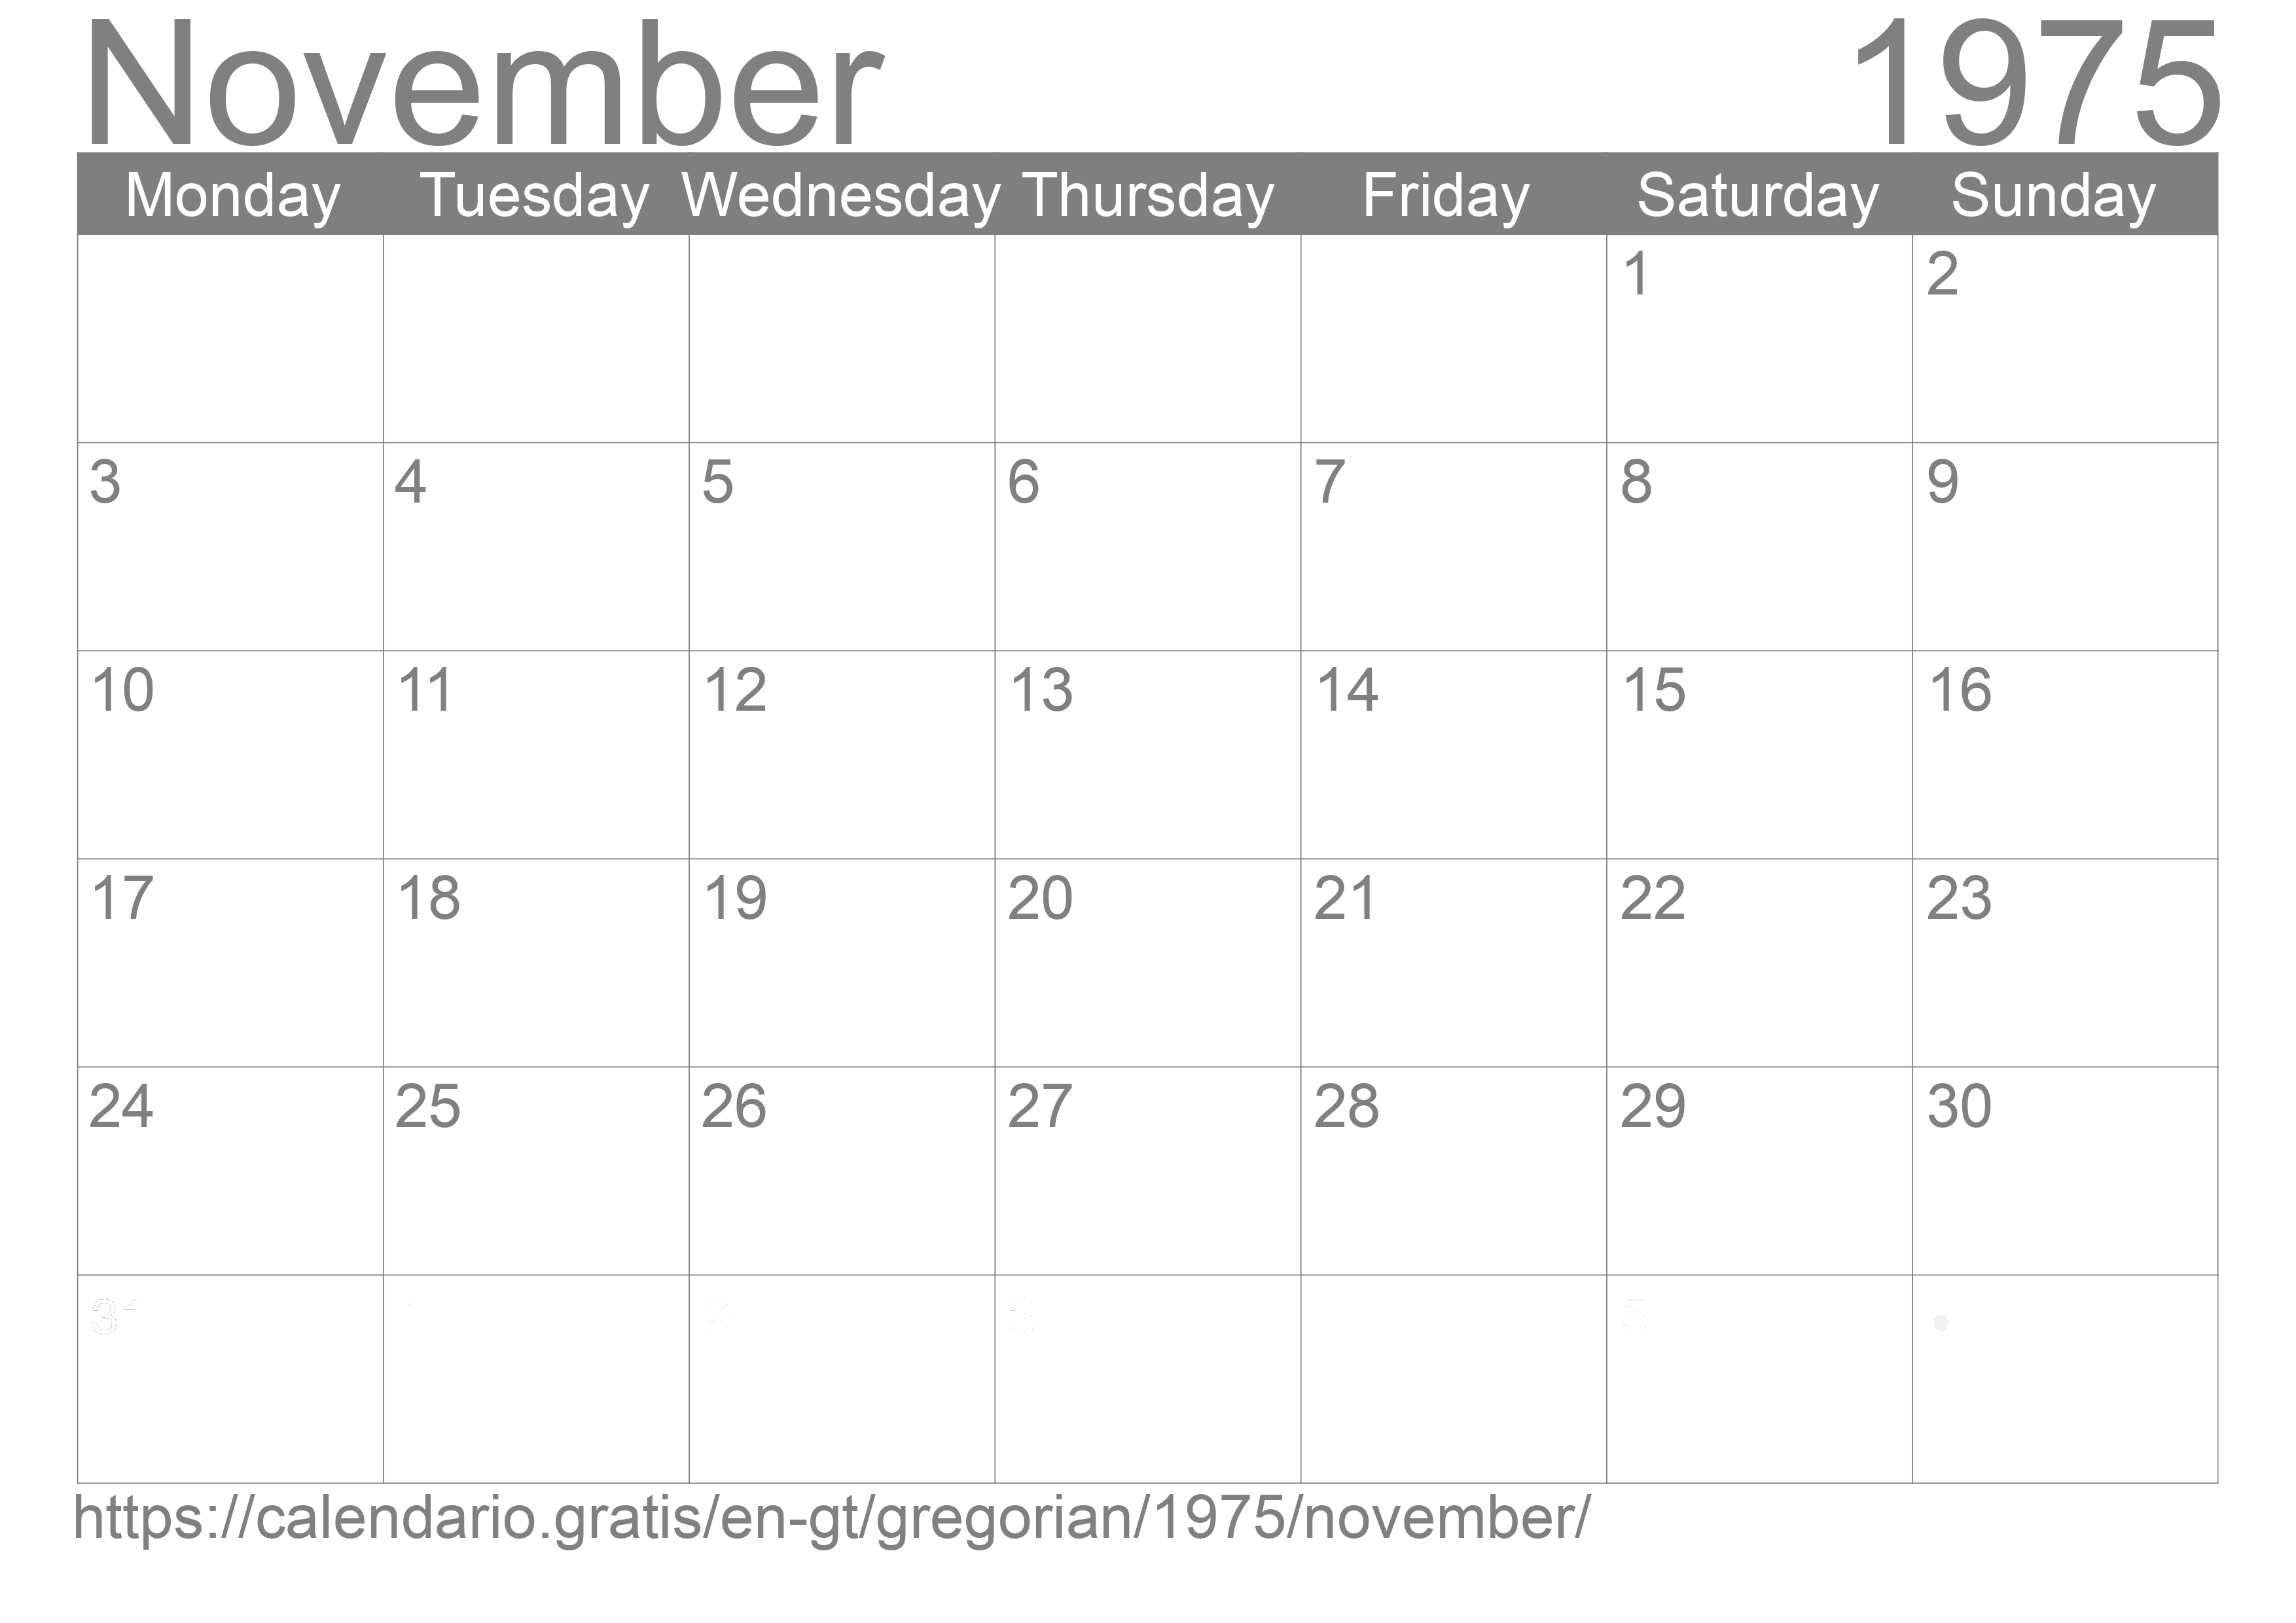 Calendar November 1975 to print